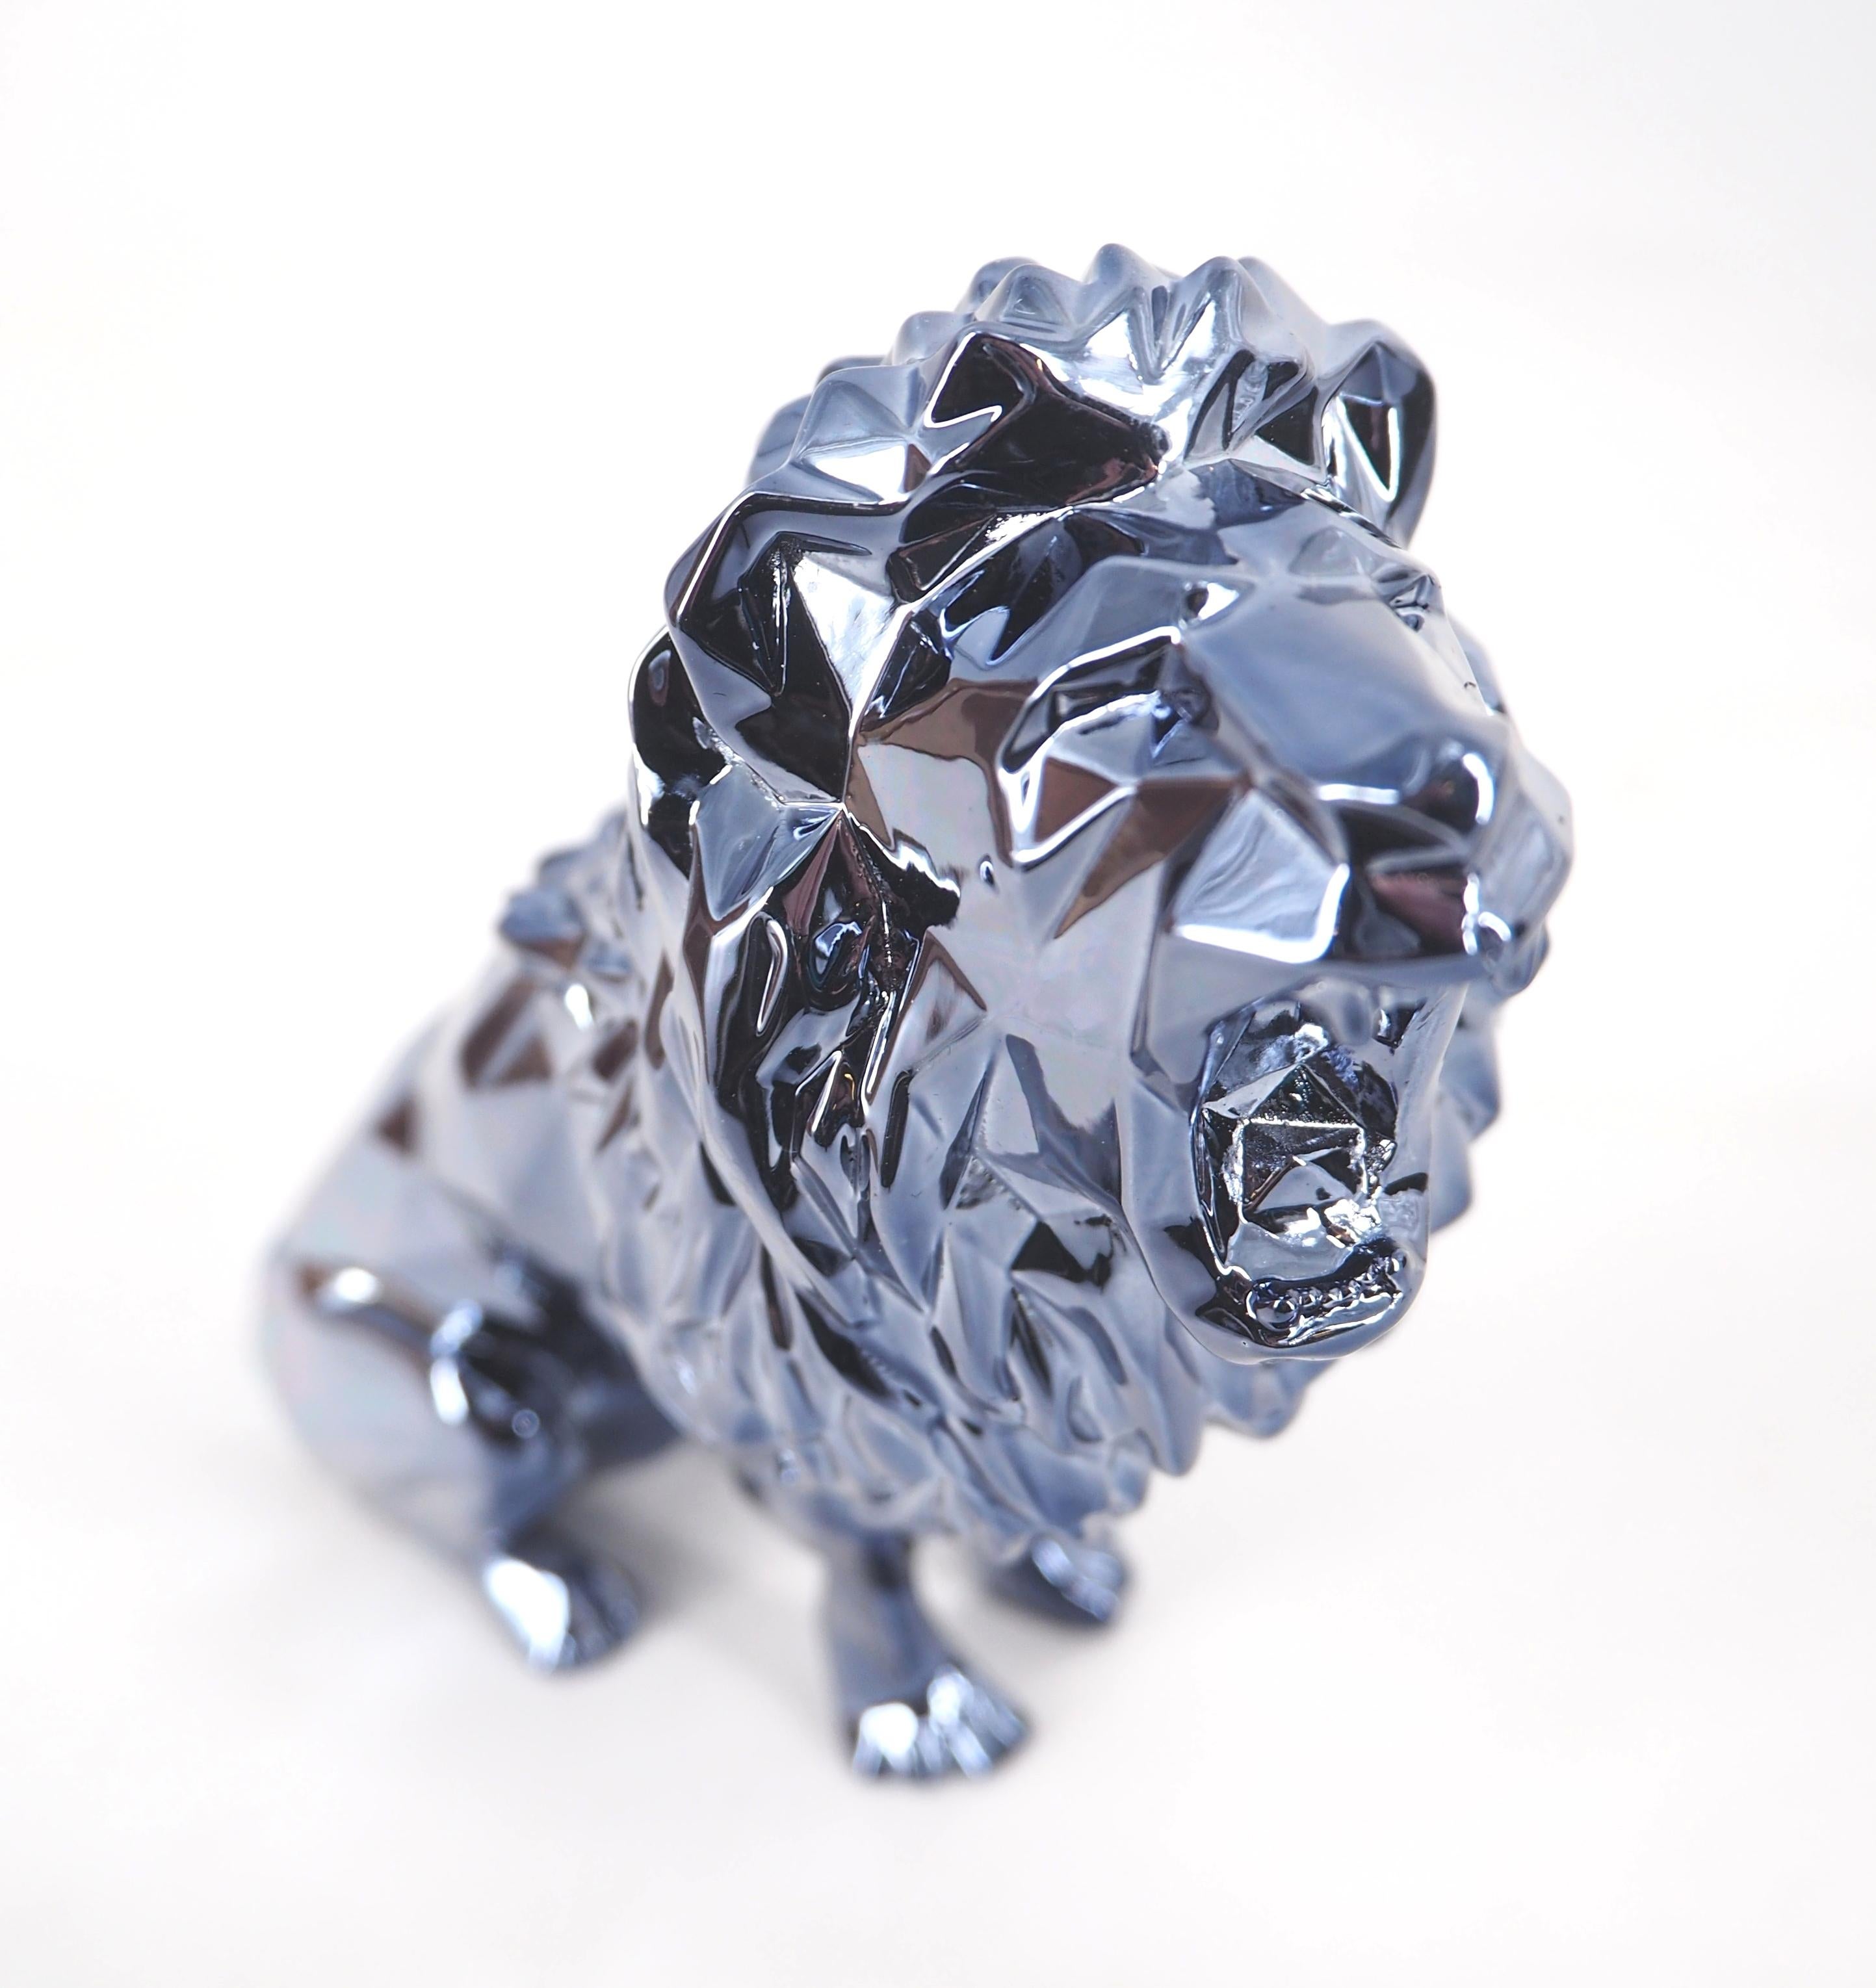 Roaring Lion Spirit (Petrol edition) - Sculpture in original box with artist coa For Sale 5